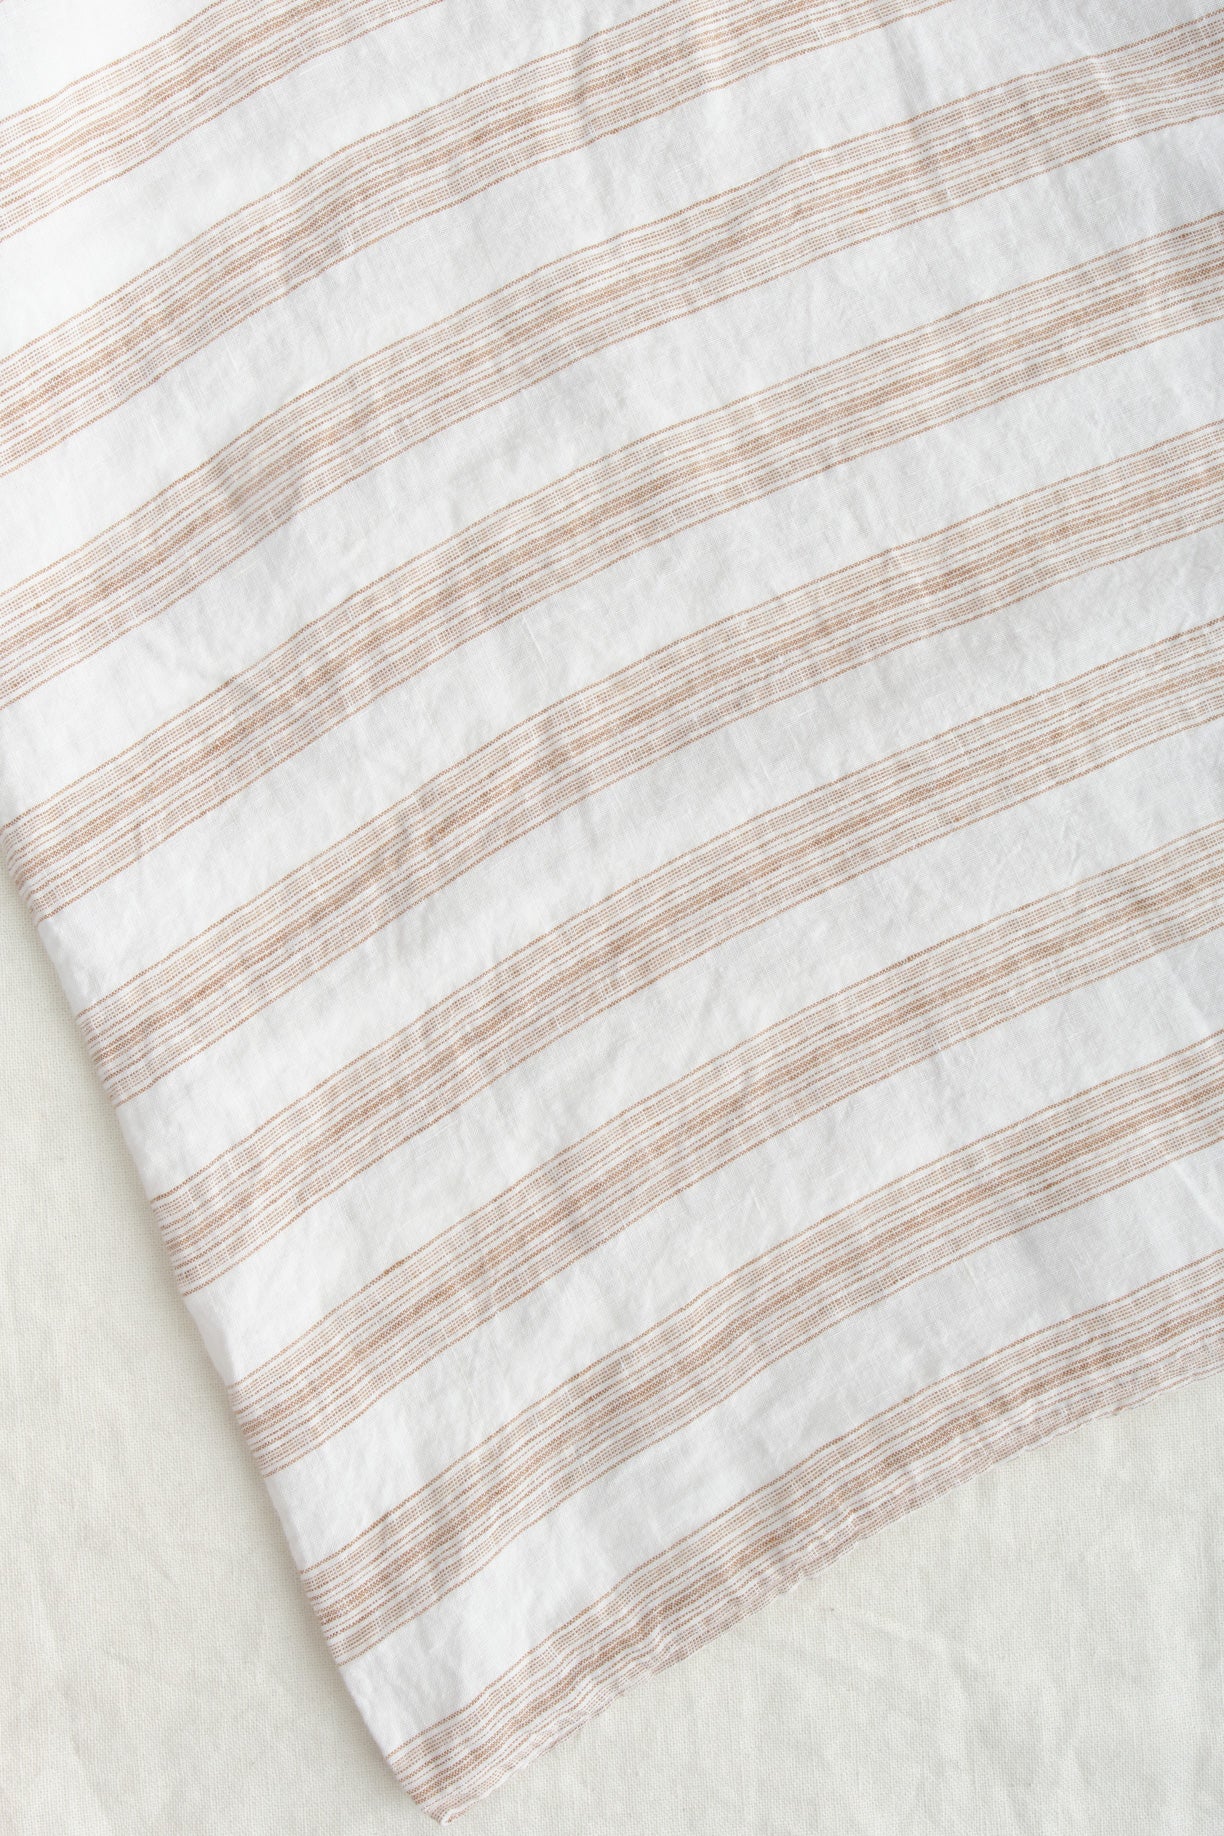 Hale Mercantile Linen Pillowcase